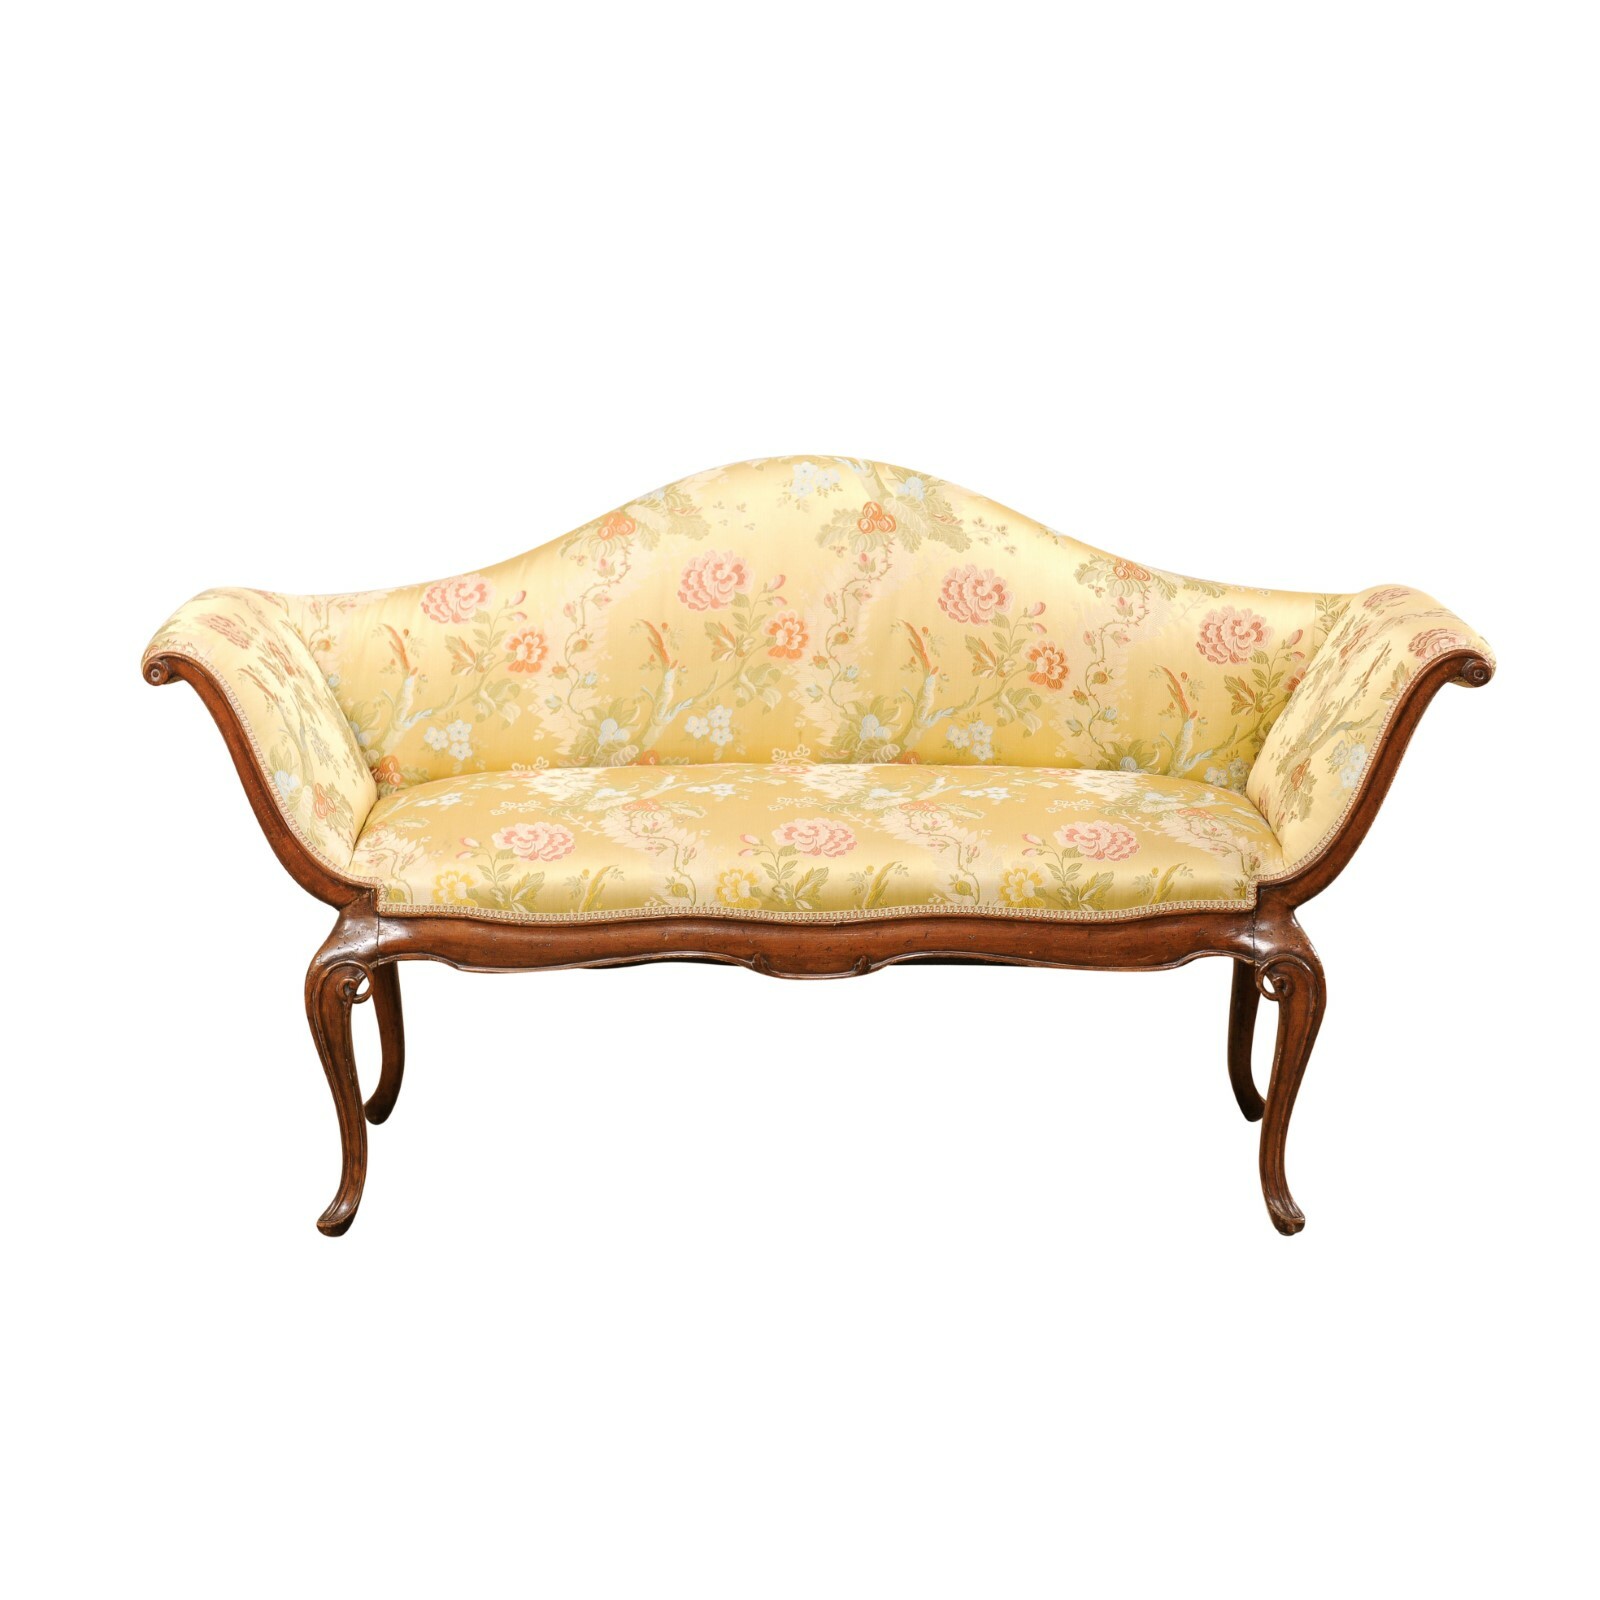 Italian Venetian Style Sofa, Early 19th C.